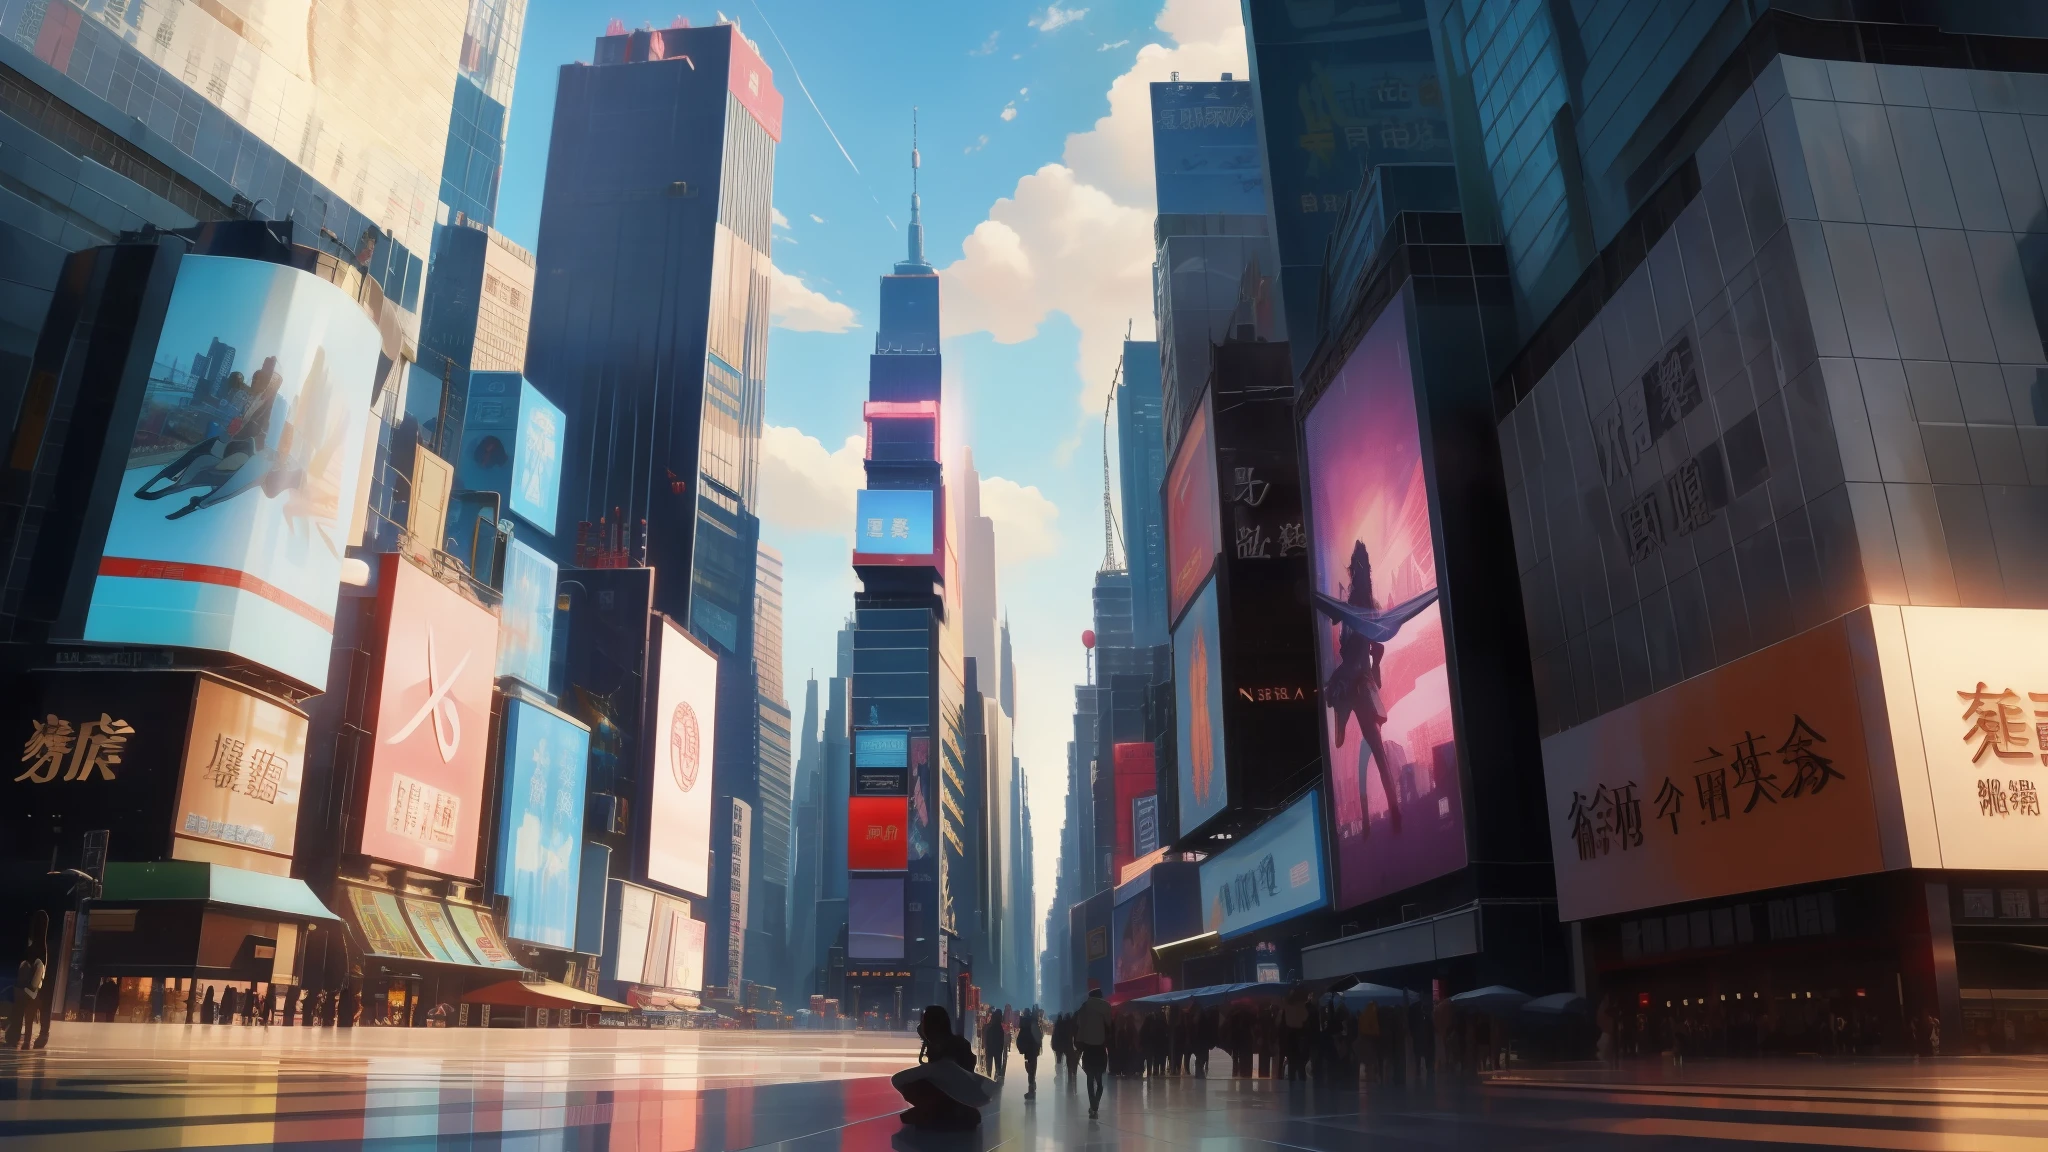 Escena de animación de Times Square en la ciudad de Nueva York bajo un cielo azul con nubes blancas,no humanos，丰富的detalle刻画，许多detalle，detalle，cg，detalle图， Animación dibujada por Xin Haicheng., Temas candentes en pixiv, Realismo magico, hermosa escena de anime, por Xin Haicheng, ( ( Xin Haicheng ) ), por Xin Haicheng, Arte de fondo animado, estilo de Xin Haicheng